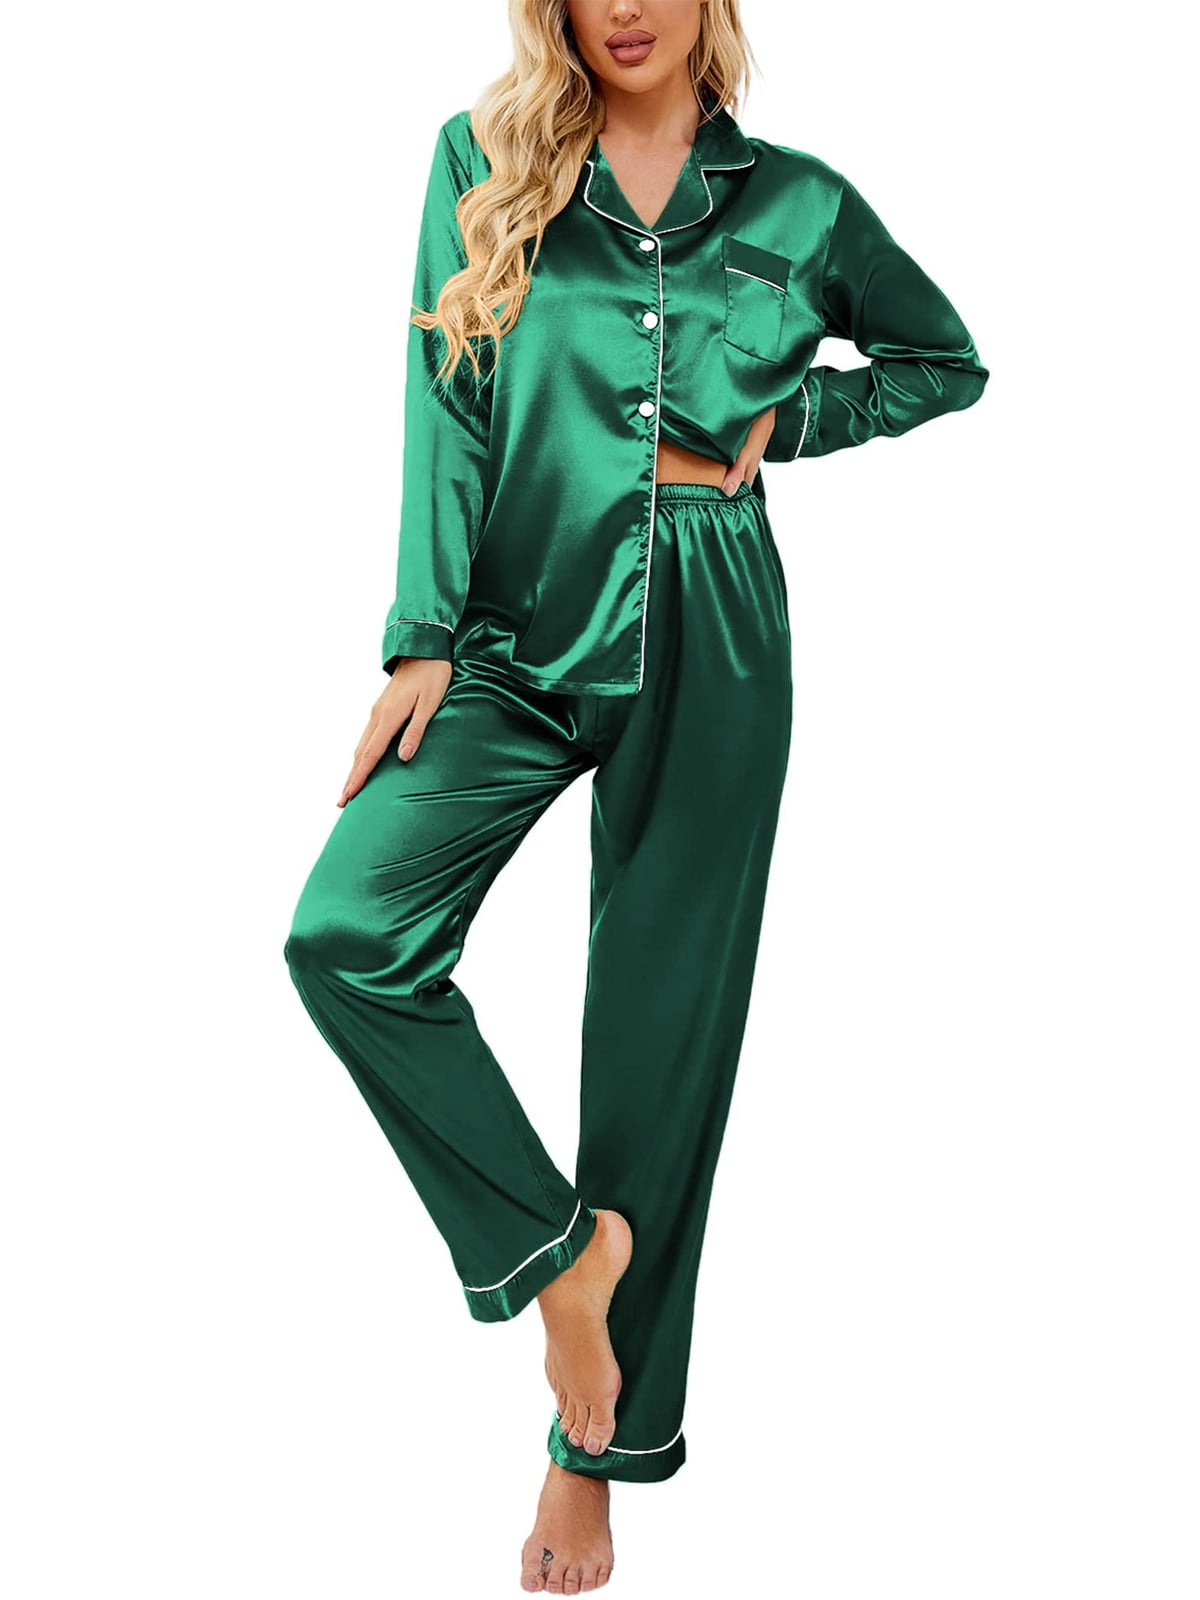 DAKIMOE Sleepwear Womens Silky Satin Pajamas Set Long Sleeve Nightwear ...